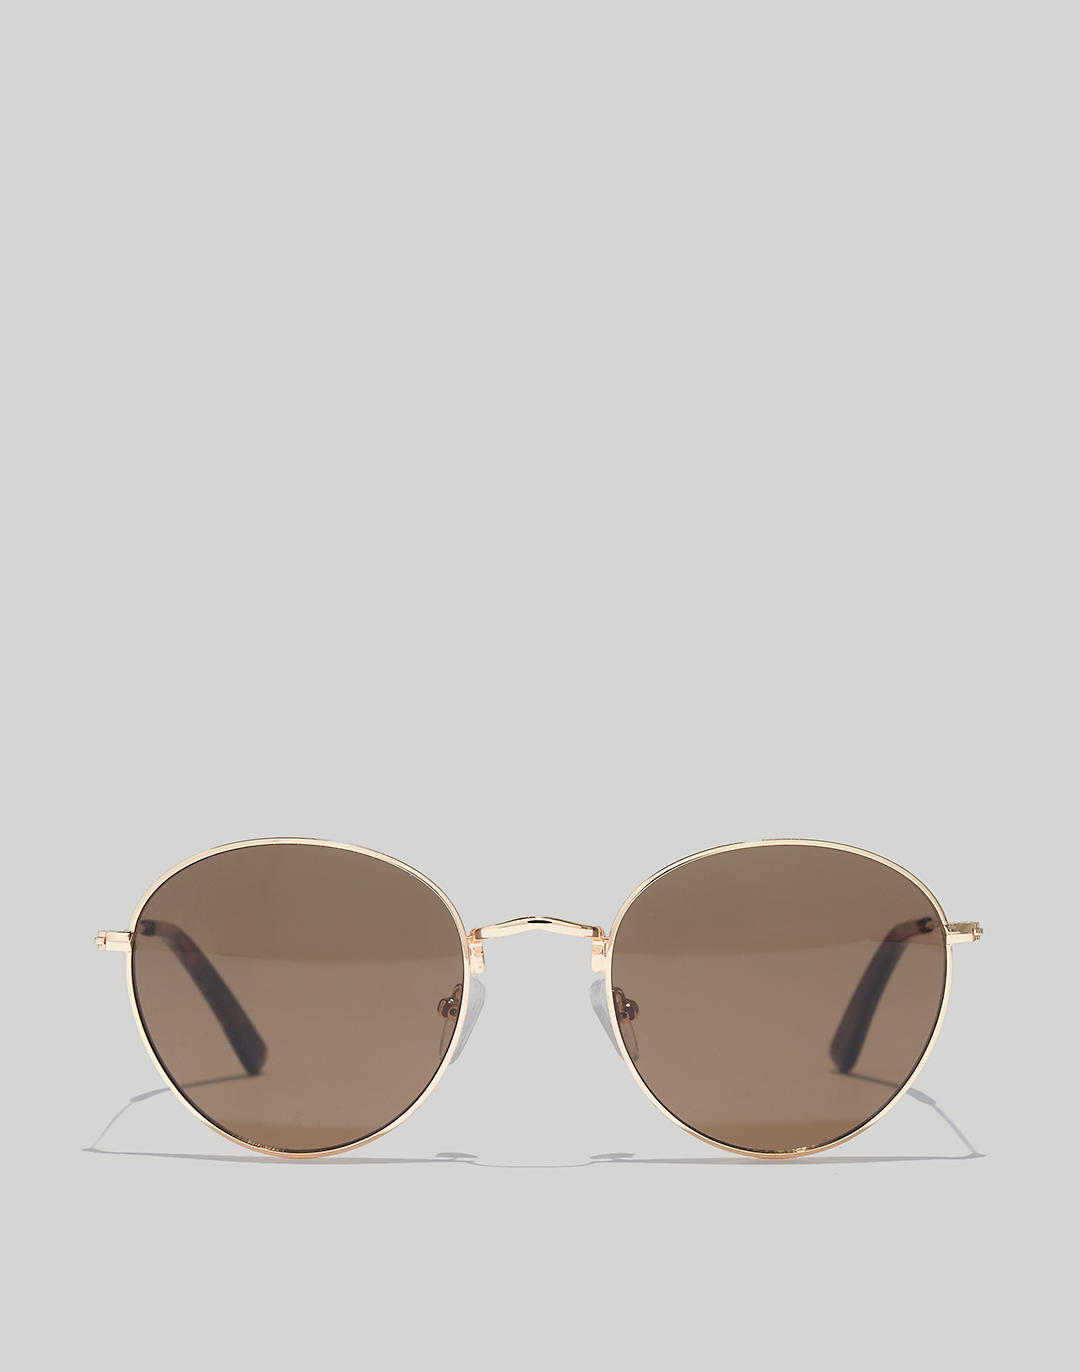 Fest Aviator Sunglasses in golden brown image 1